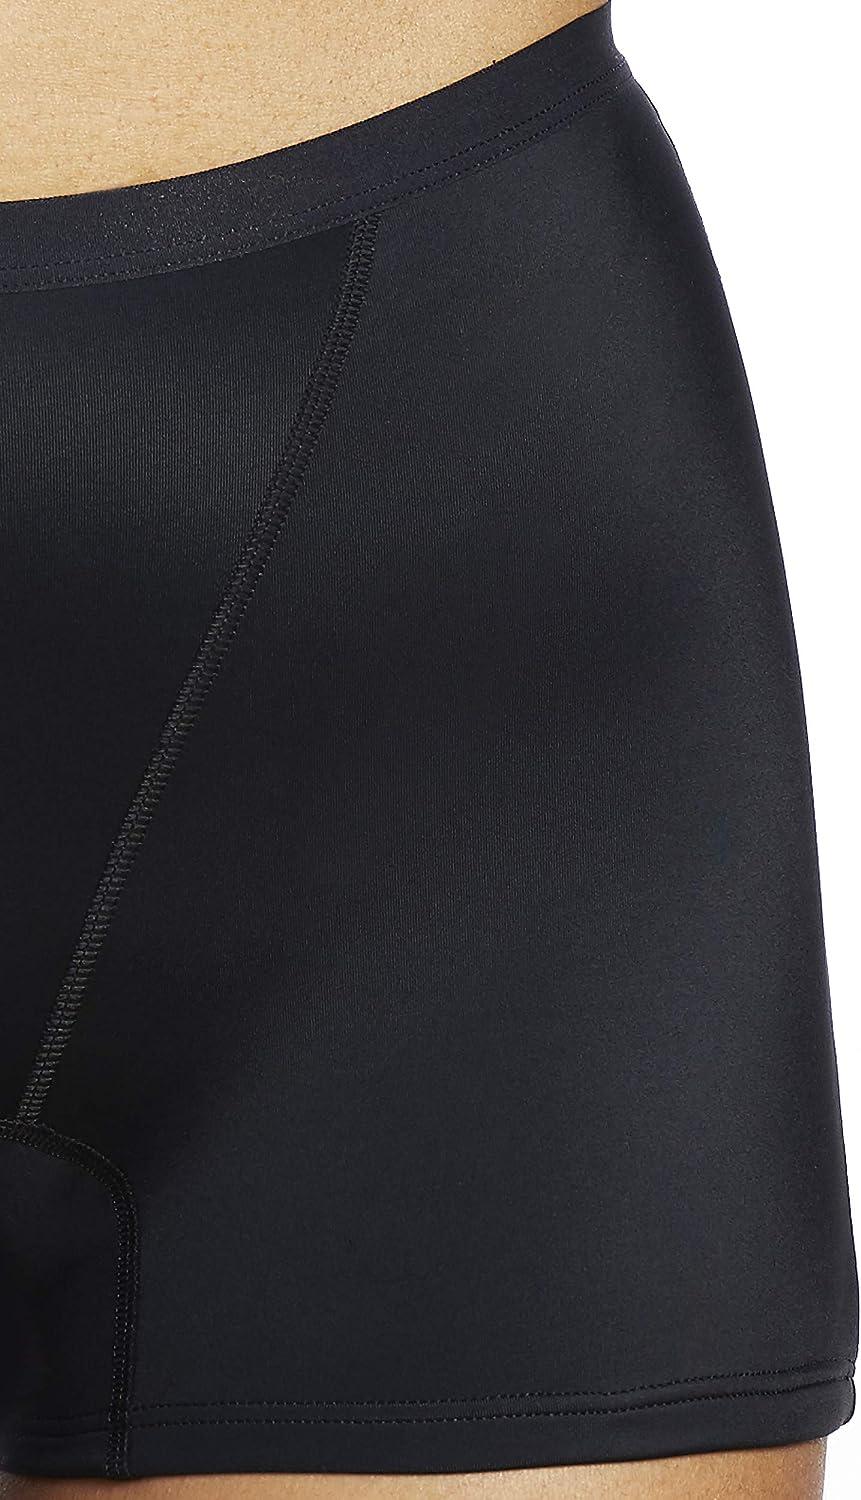 THINX Boyshort Period Underwear for Women FSA HSA Approved Feminine Care  Menstrual Underwear Holds 3 Tampons Black 4X